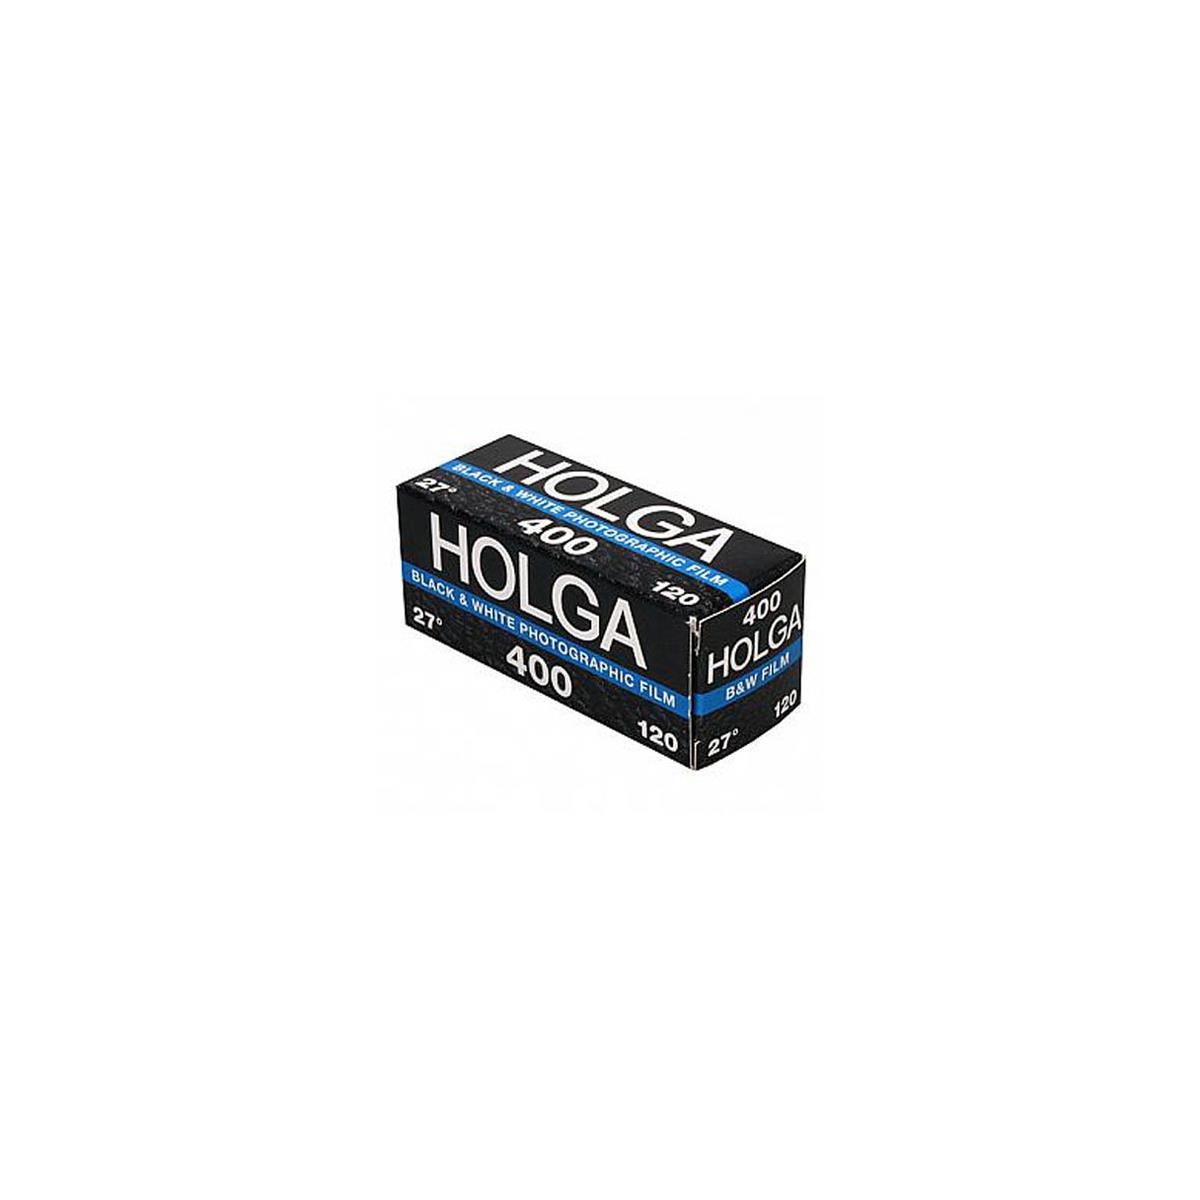 Черно-белая пленка Holga 120, ISO 400 #191420